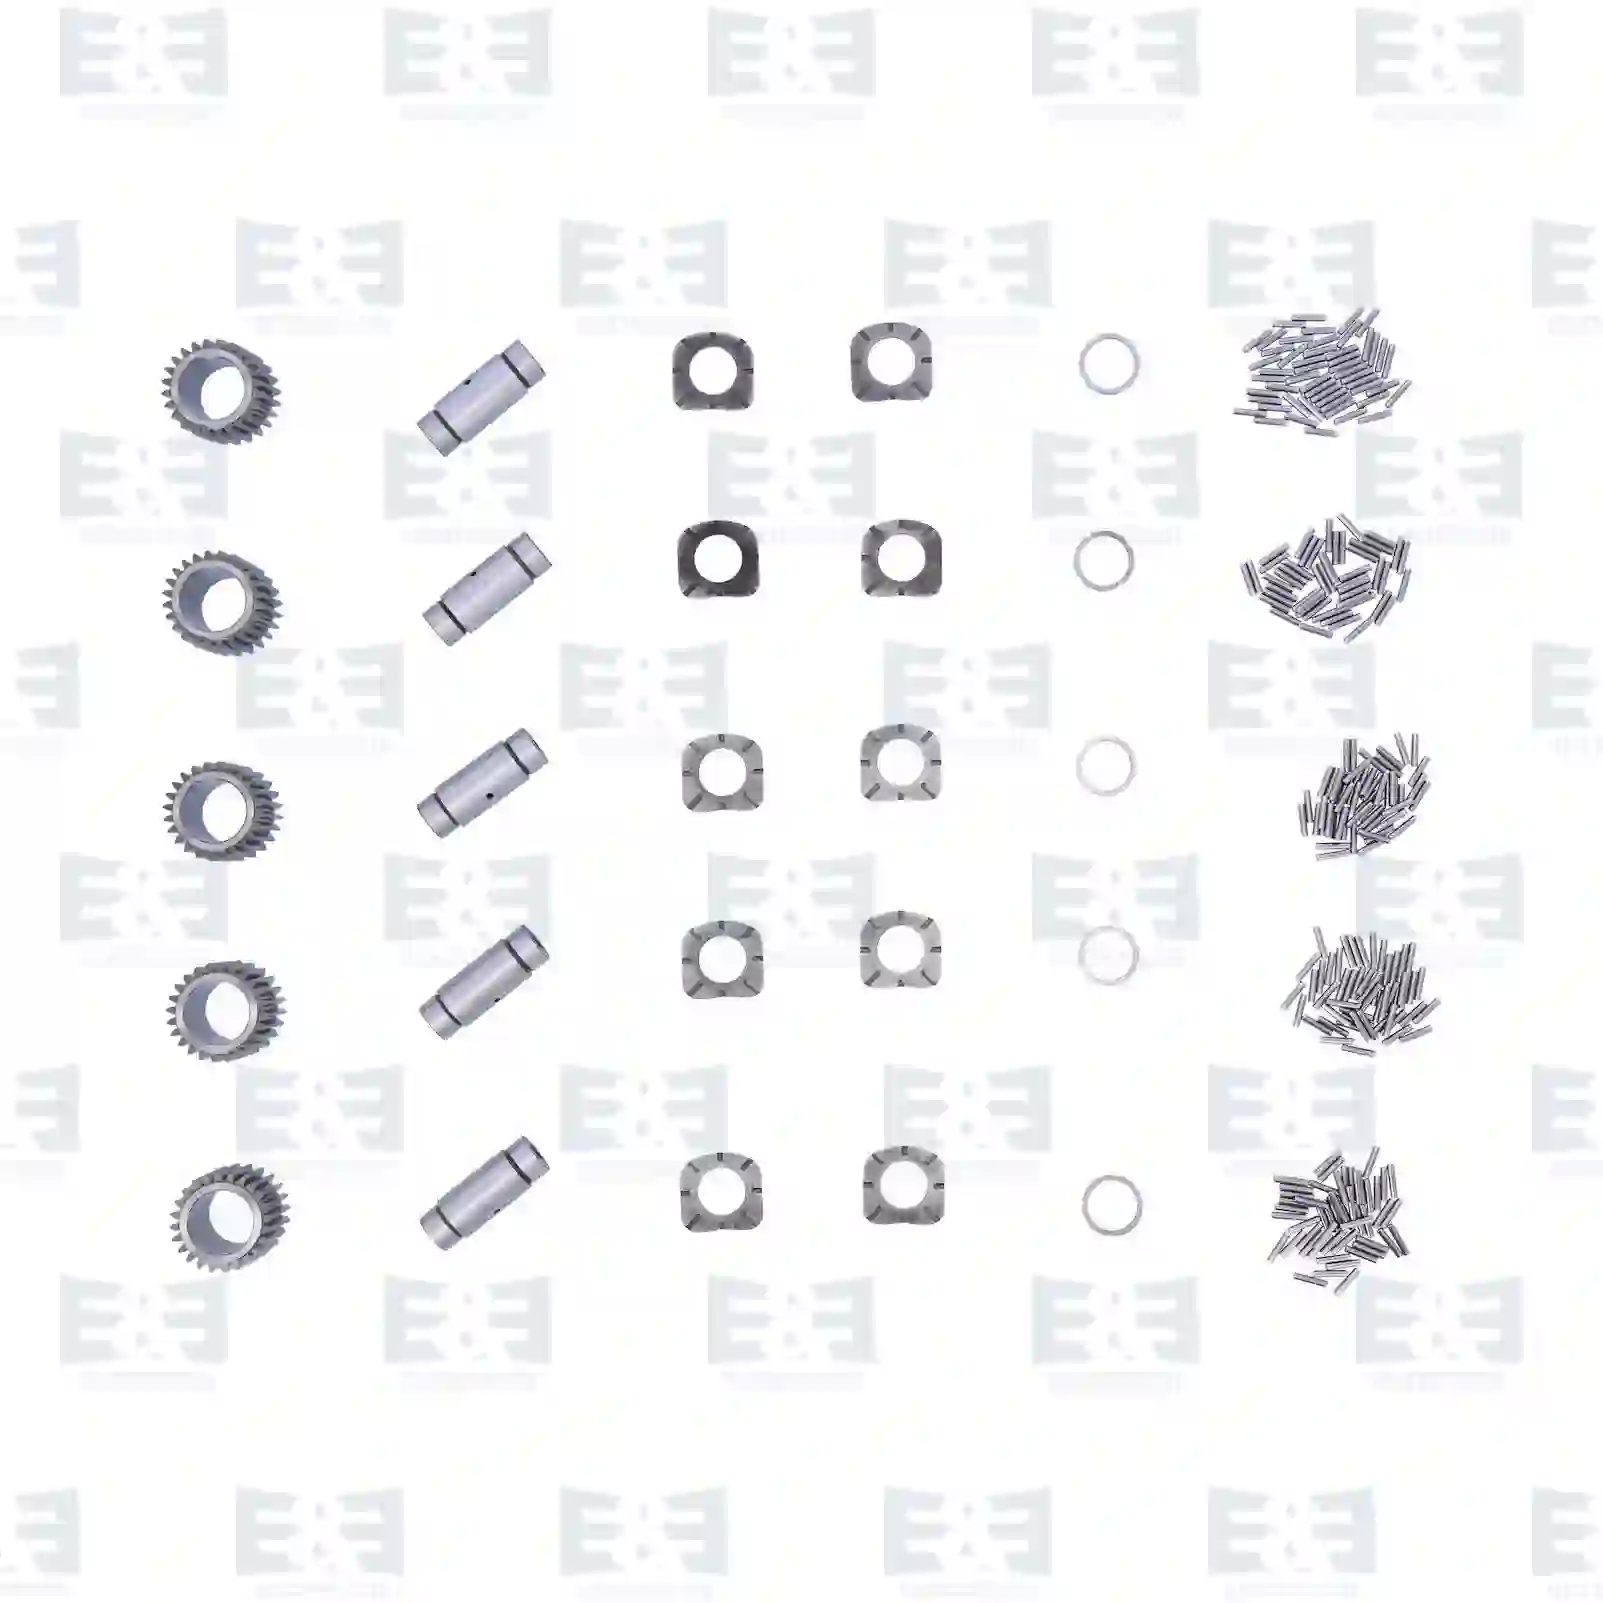  Planetary gear set || E&E Truck Spare Parts | Truck Spare Parts, Auotomotive Spare Parts